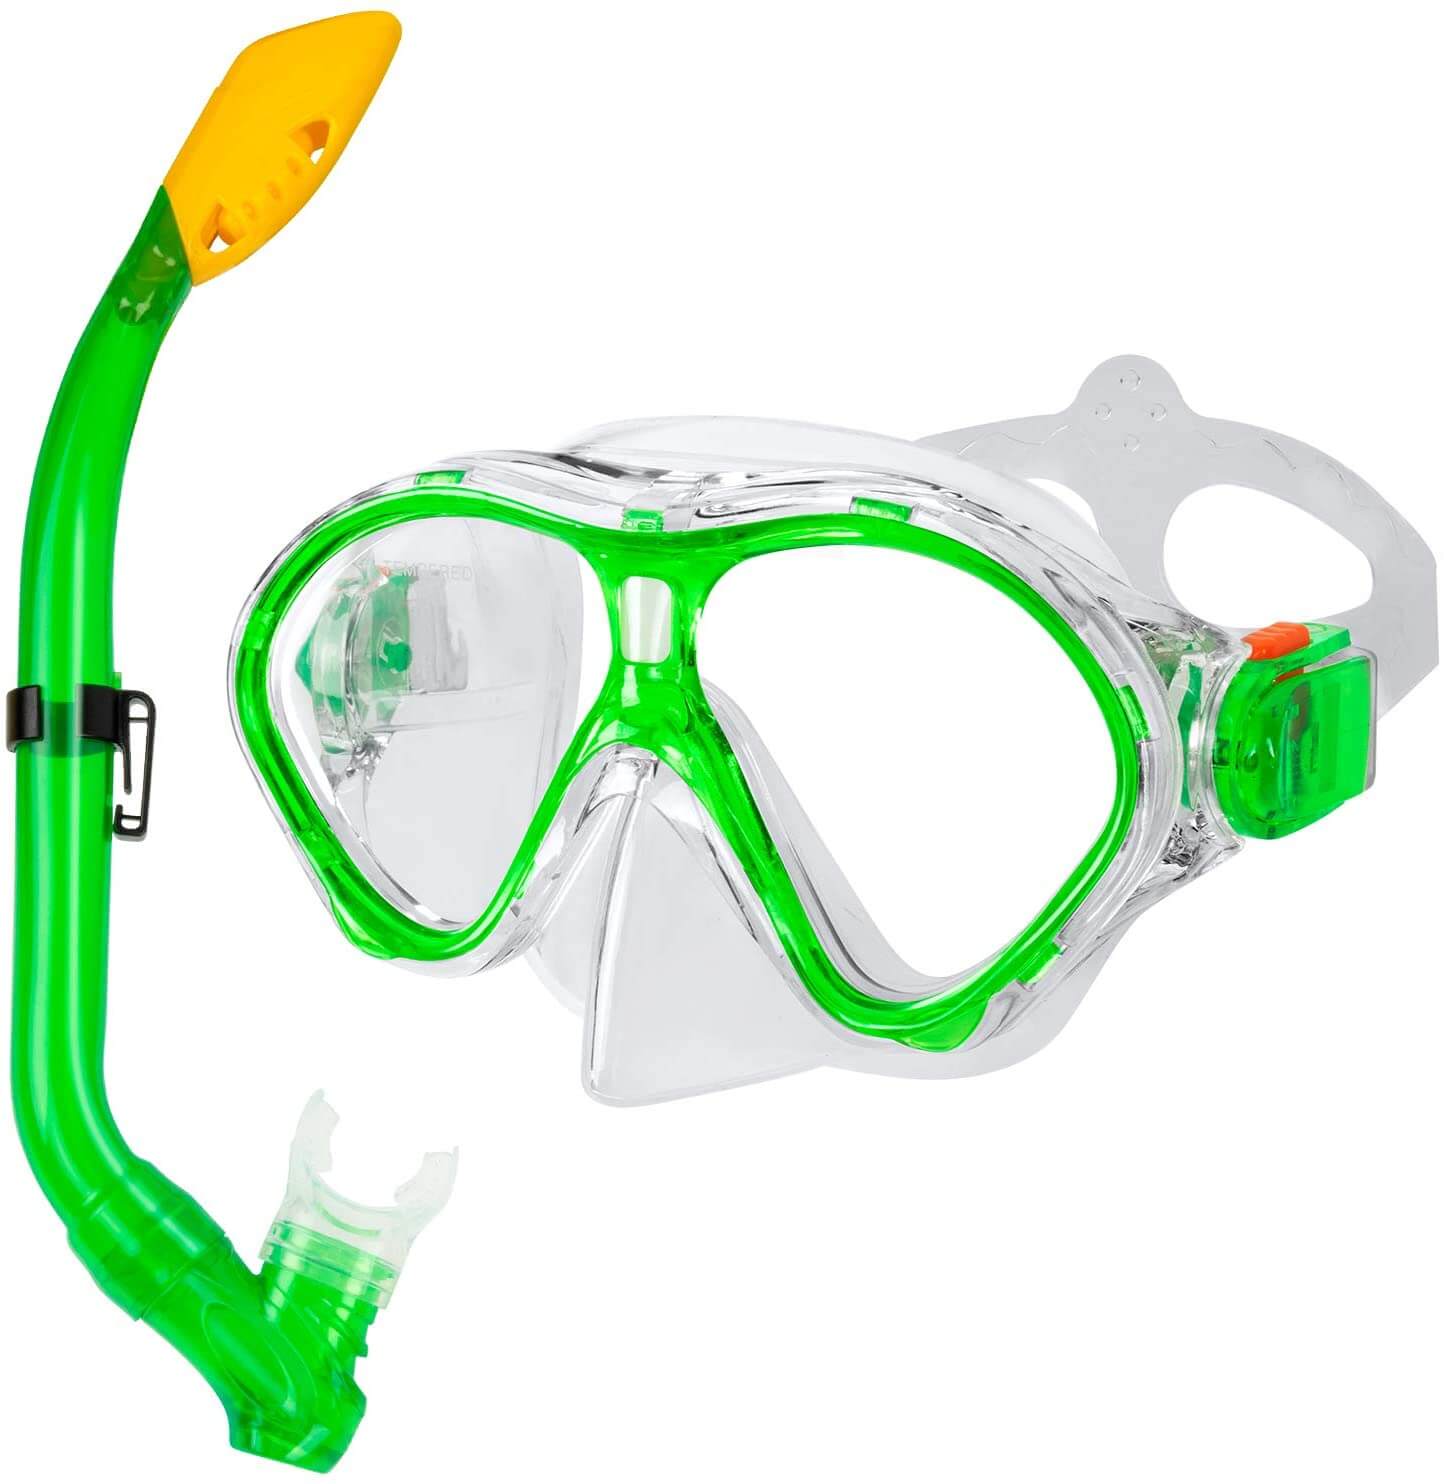 Best Kid's Snorkel Mask: Gintenco Kids Snorkel Set Green